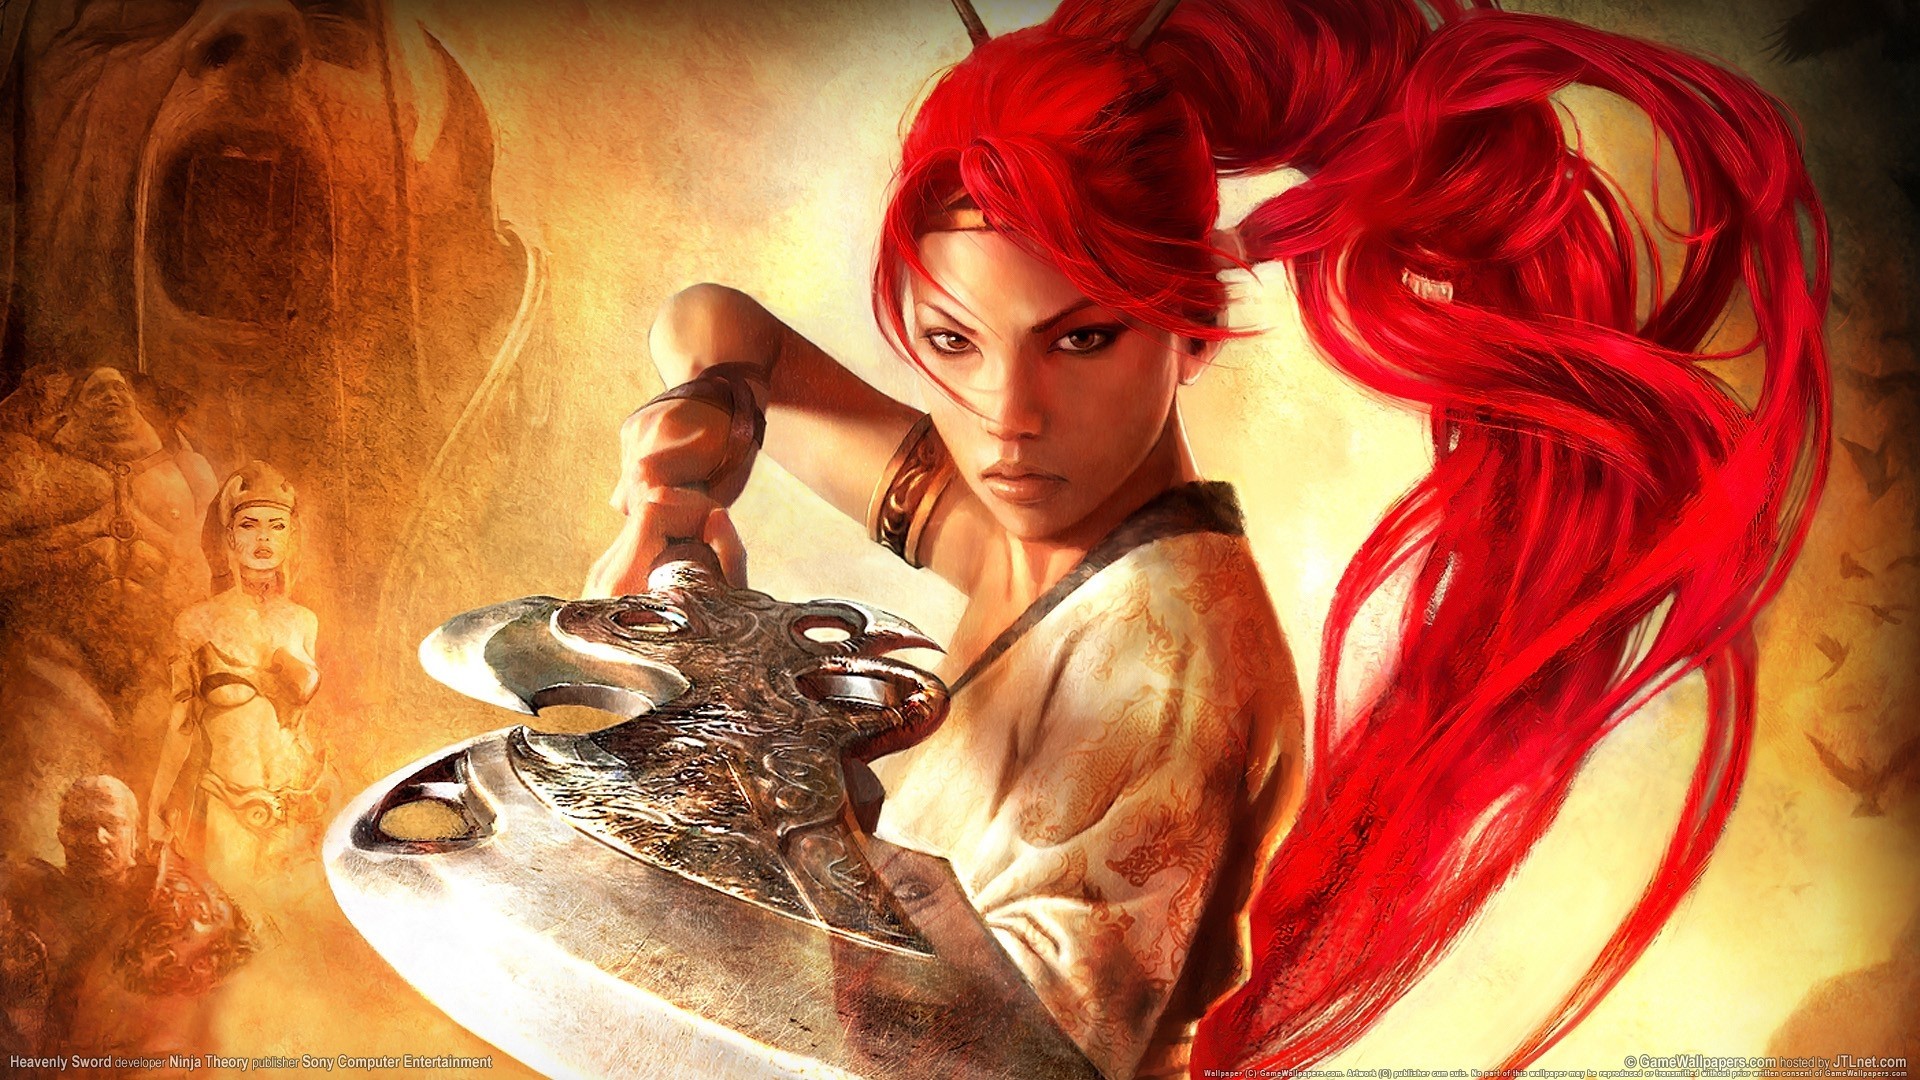 1920x1080 Wallpaper Heavenly sword, Nariko, Girl, Red, Hair, Sword, Warrior